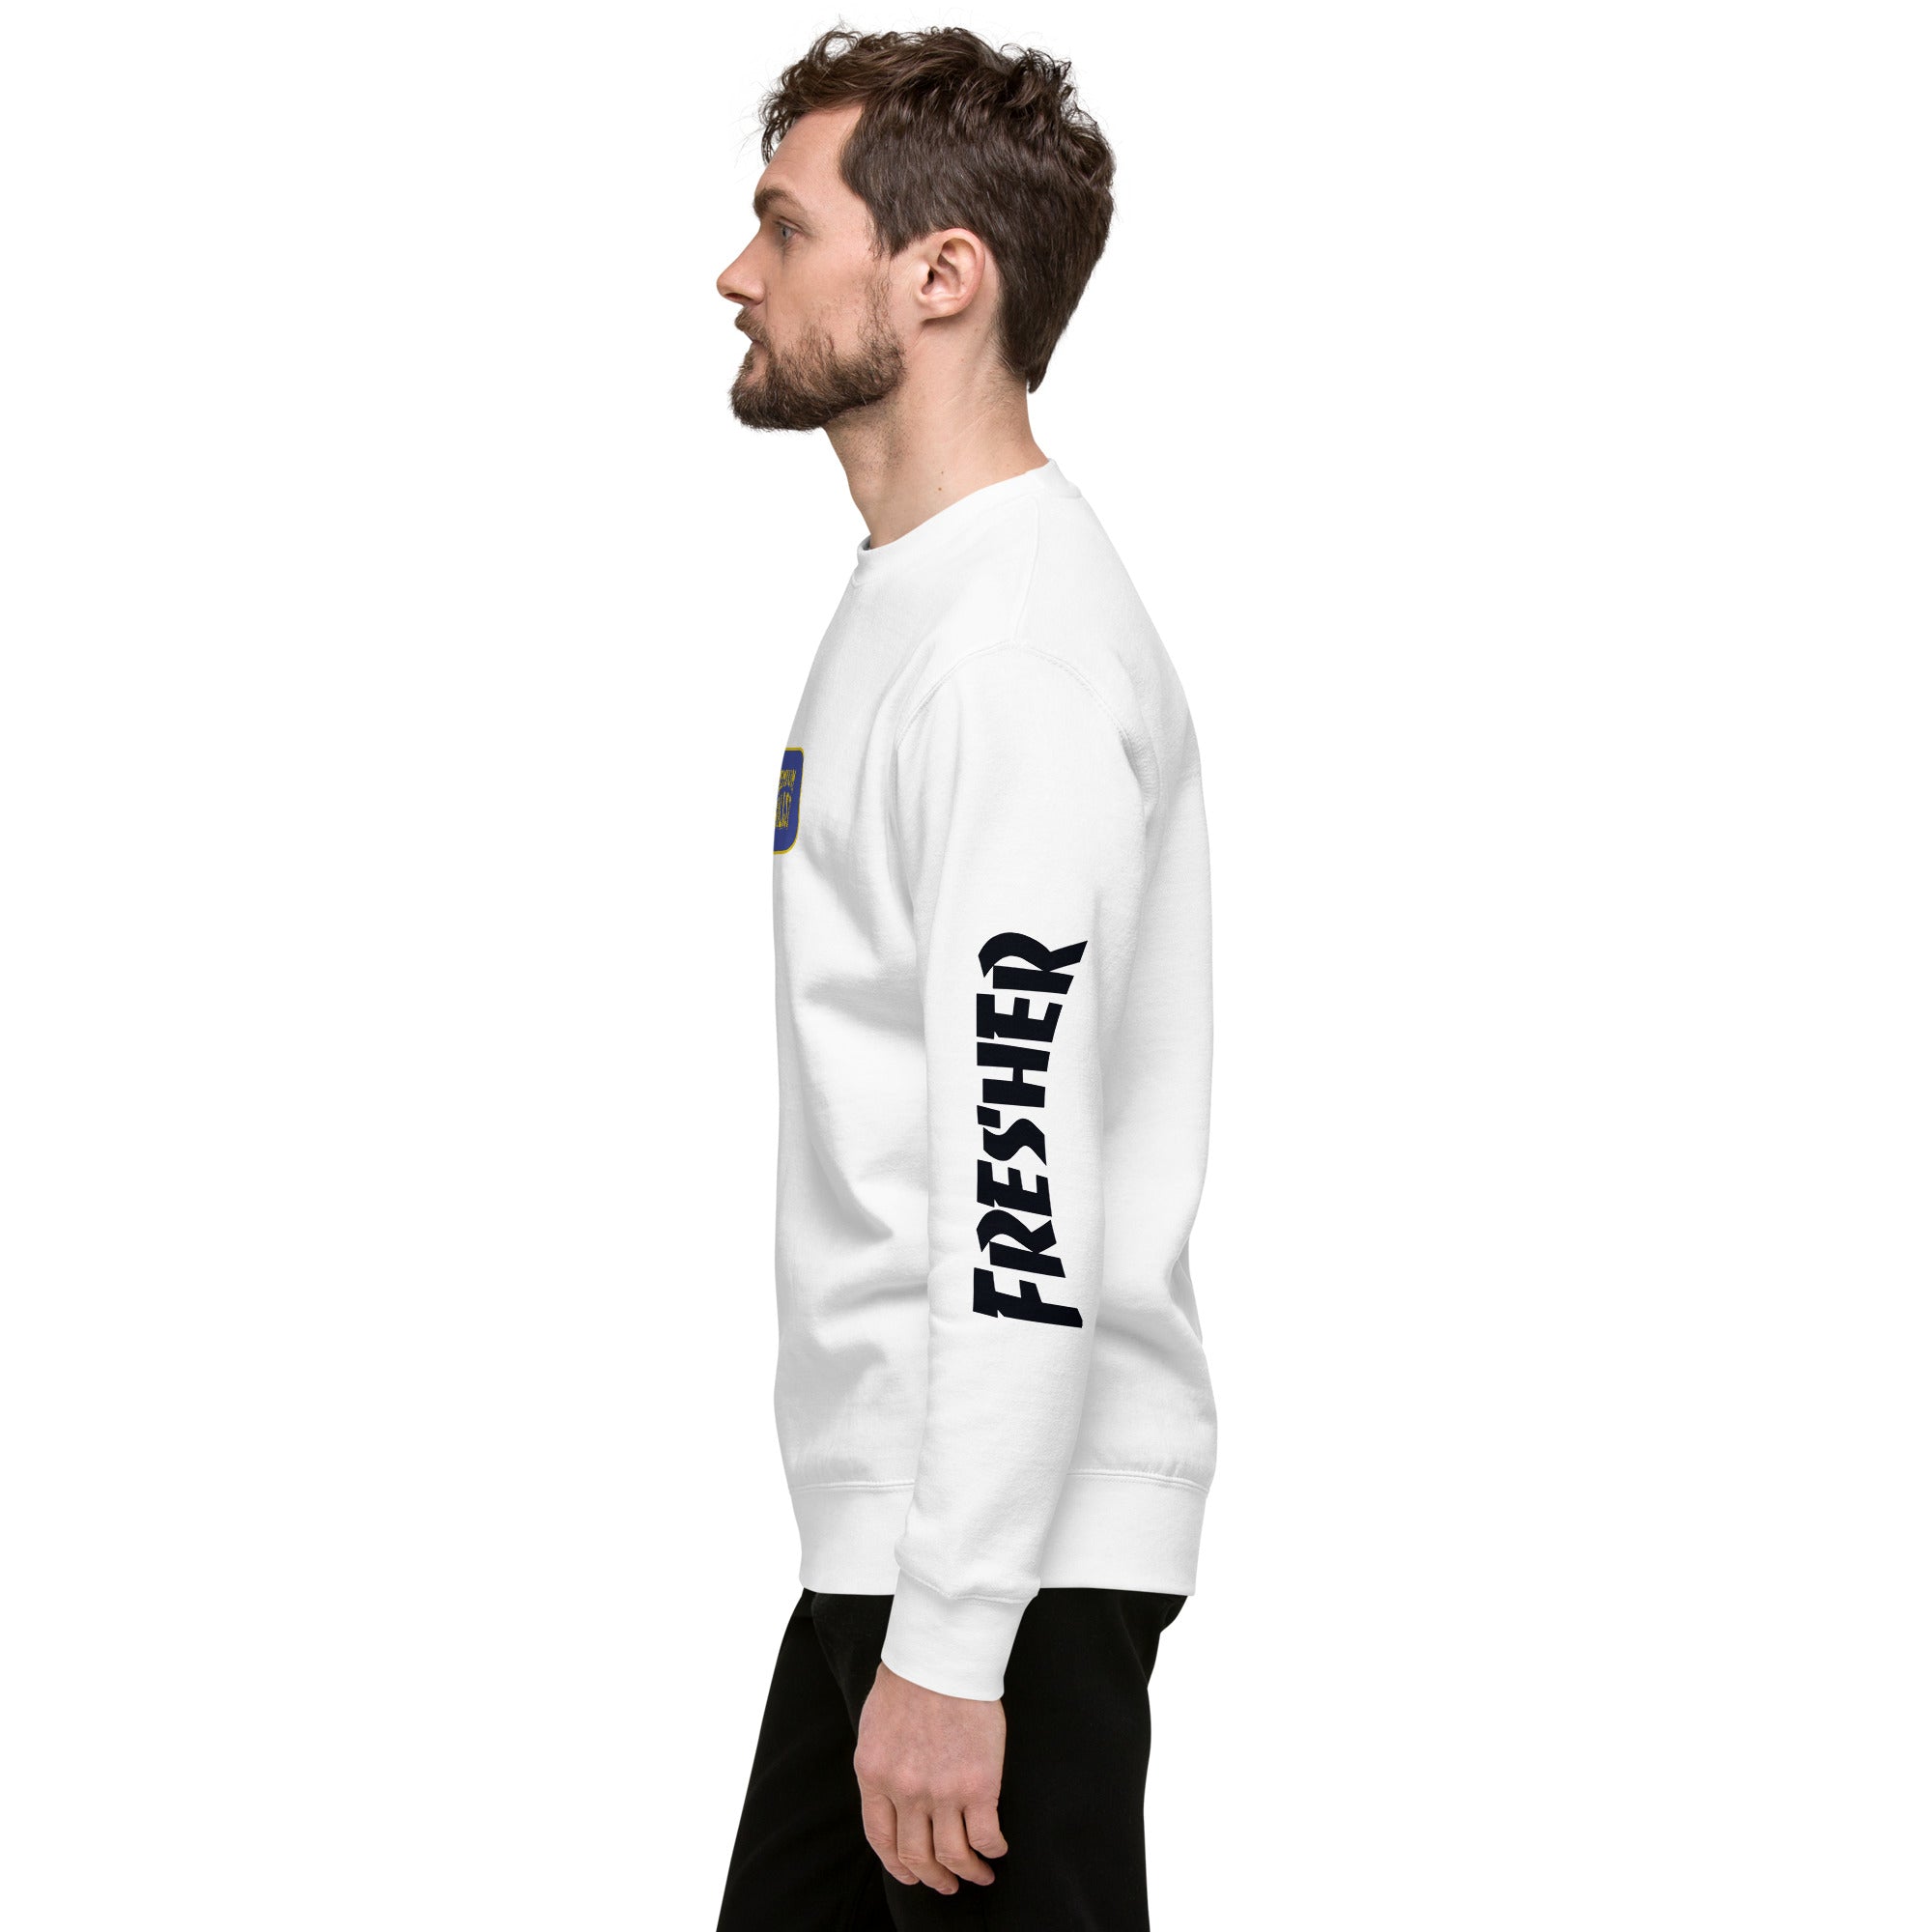 More is more / Frizc Unisex Premium Sweatshirt